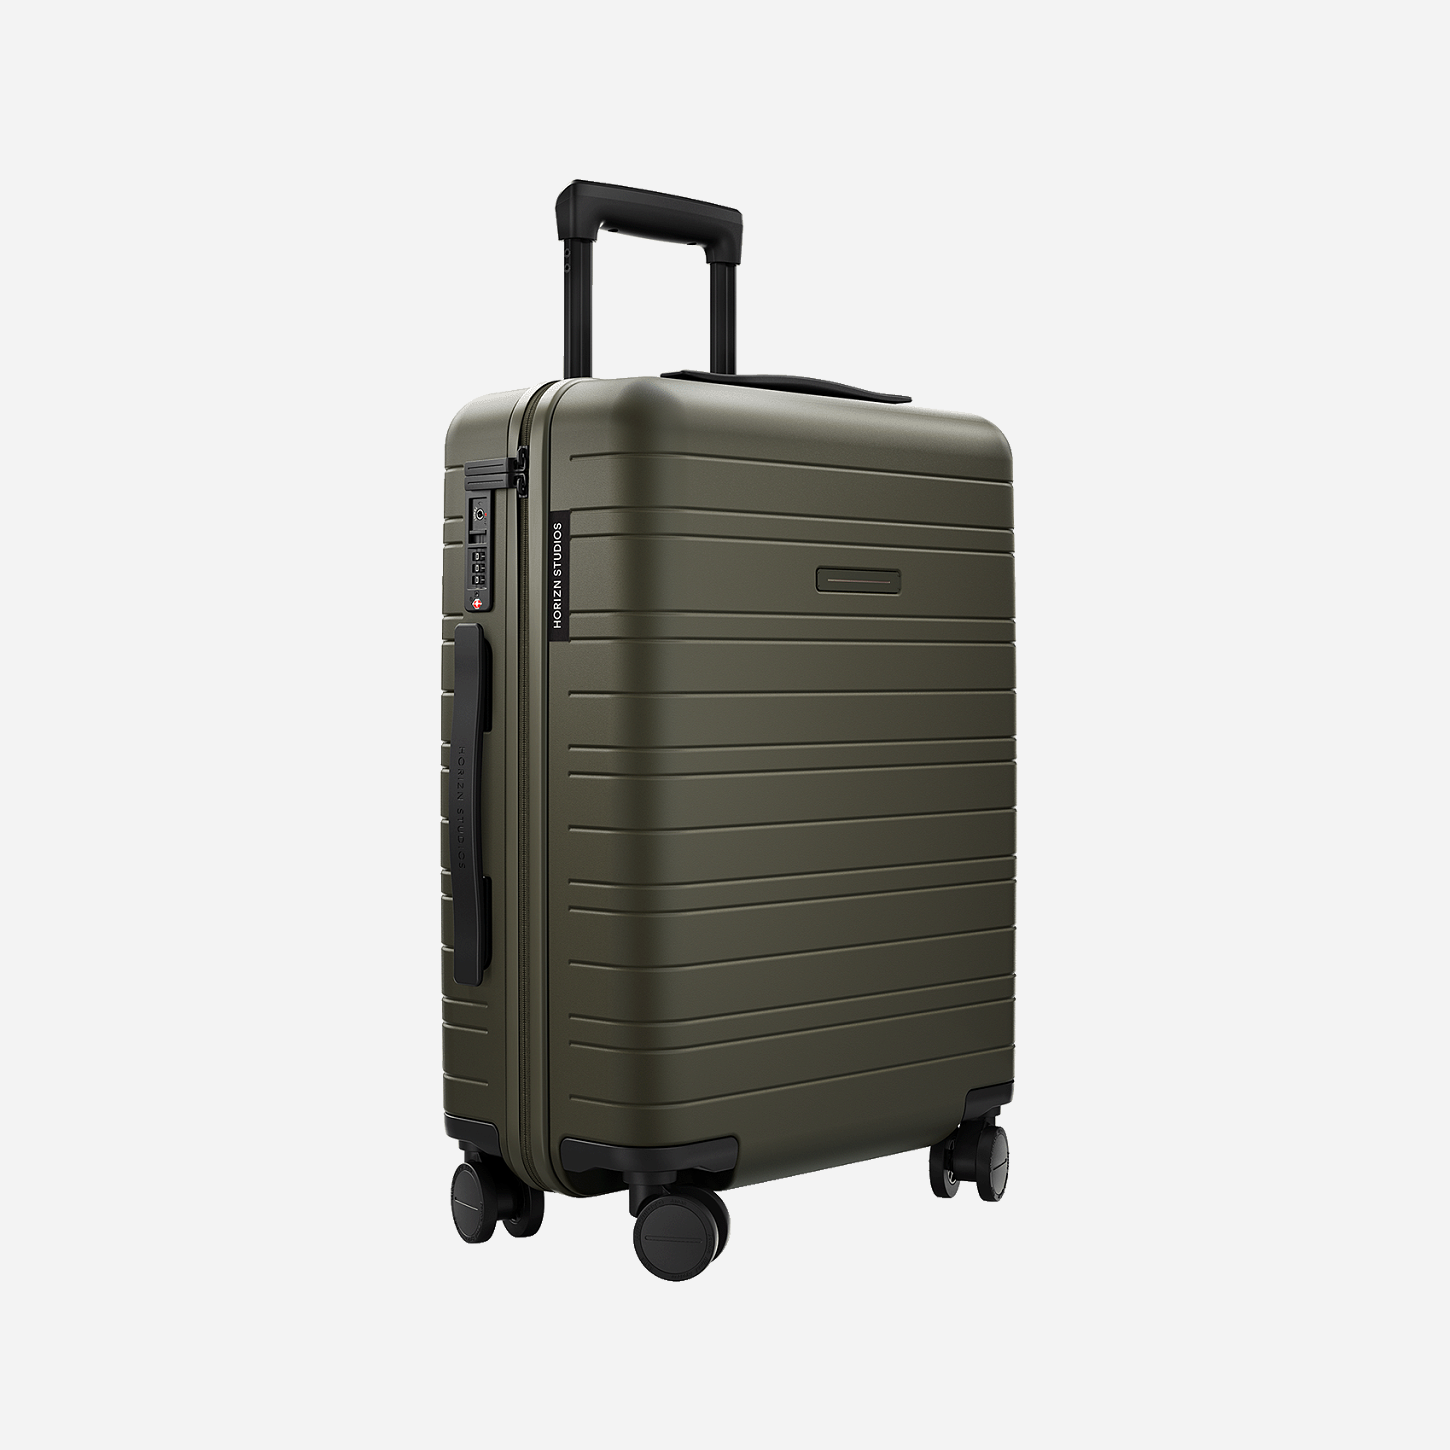 Horizn Studios H5 Smart Luggage with USB port, dark olive color